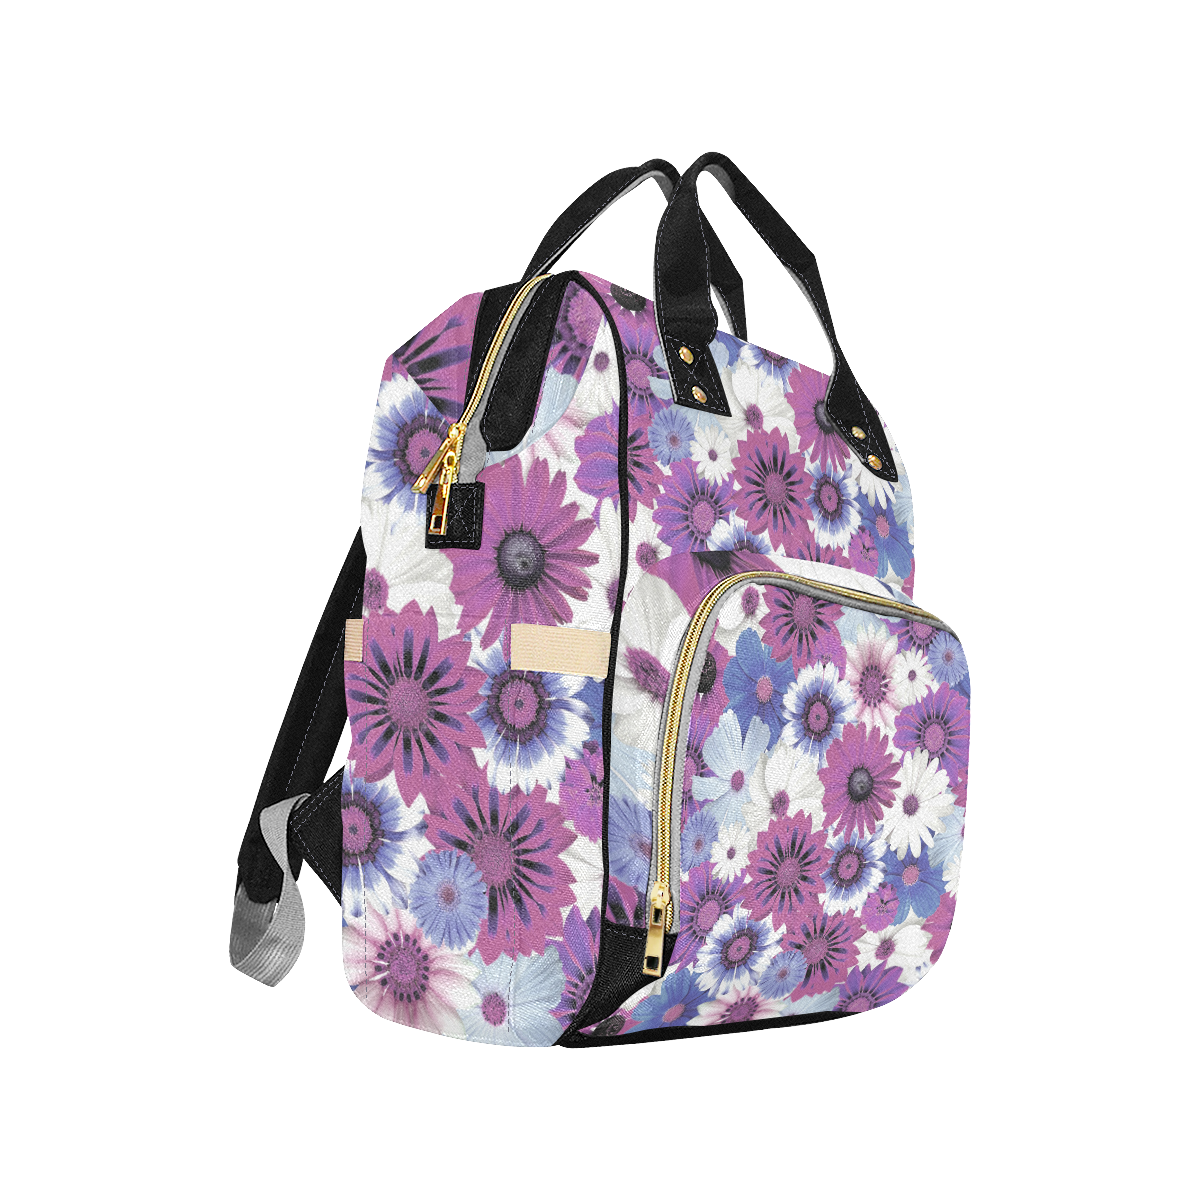 Spring Time Flowers 5 Multi-Function Diaper Backpack/Diaper Bag (Model 1688)